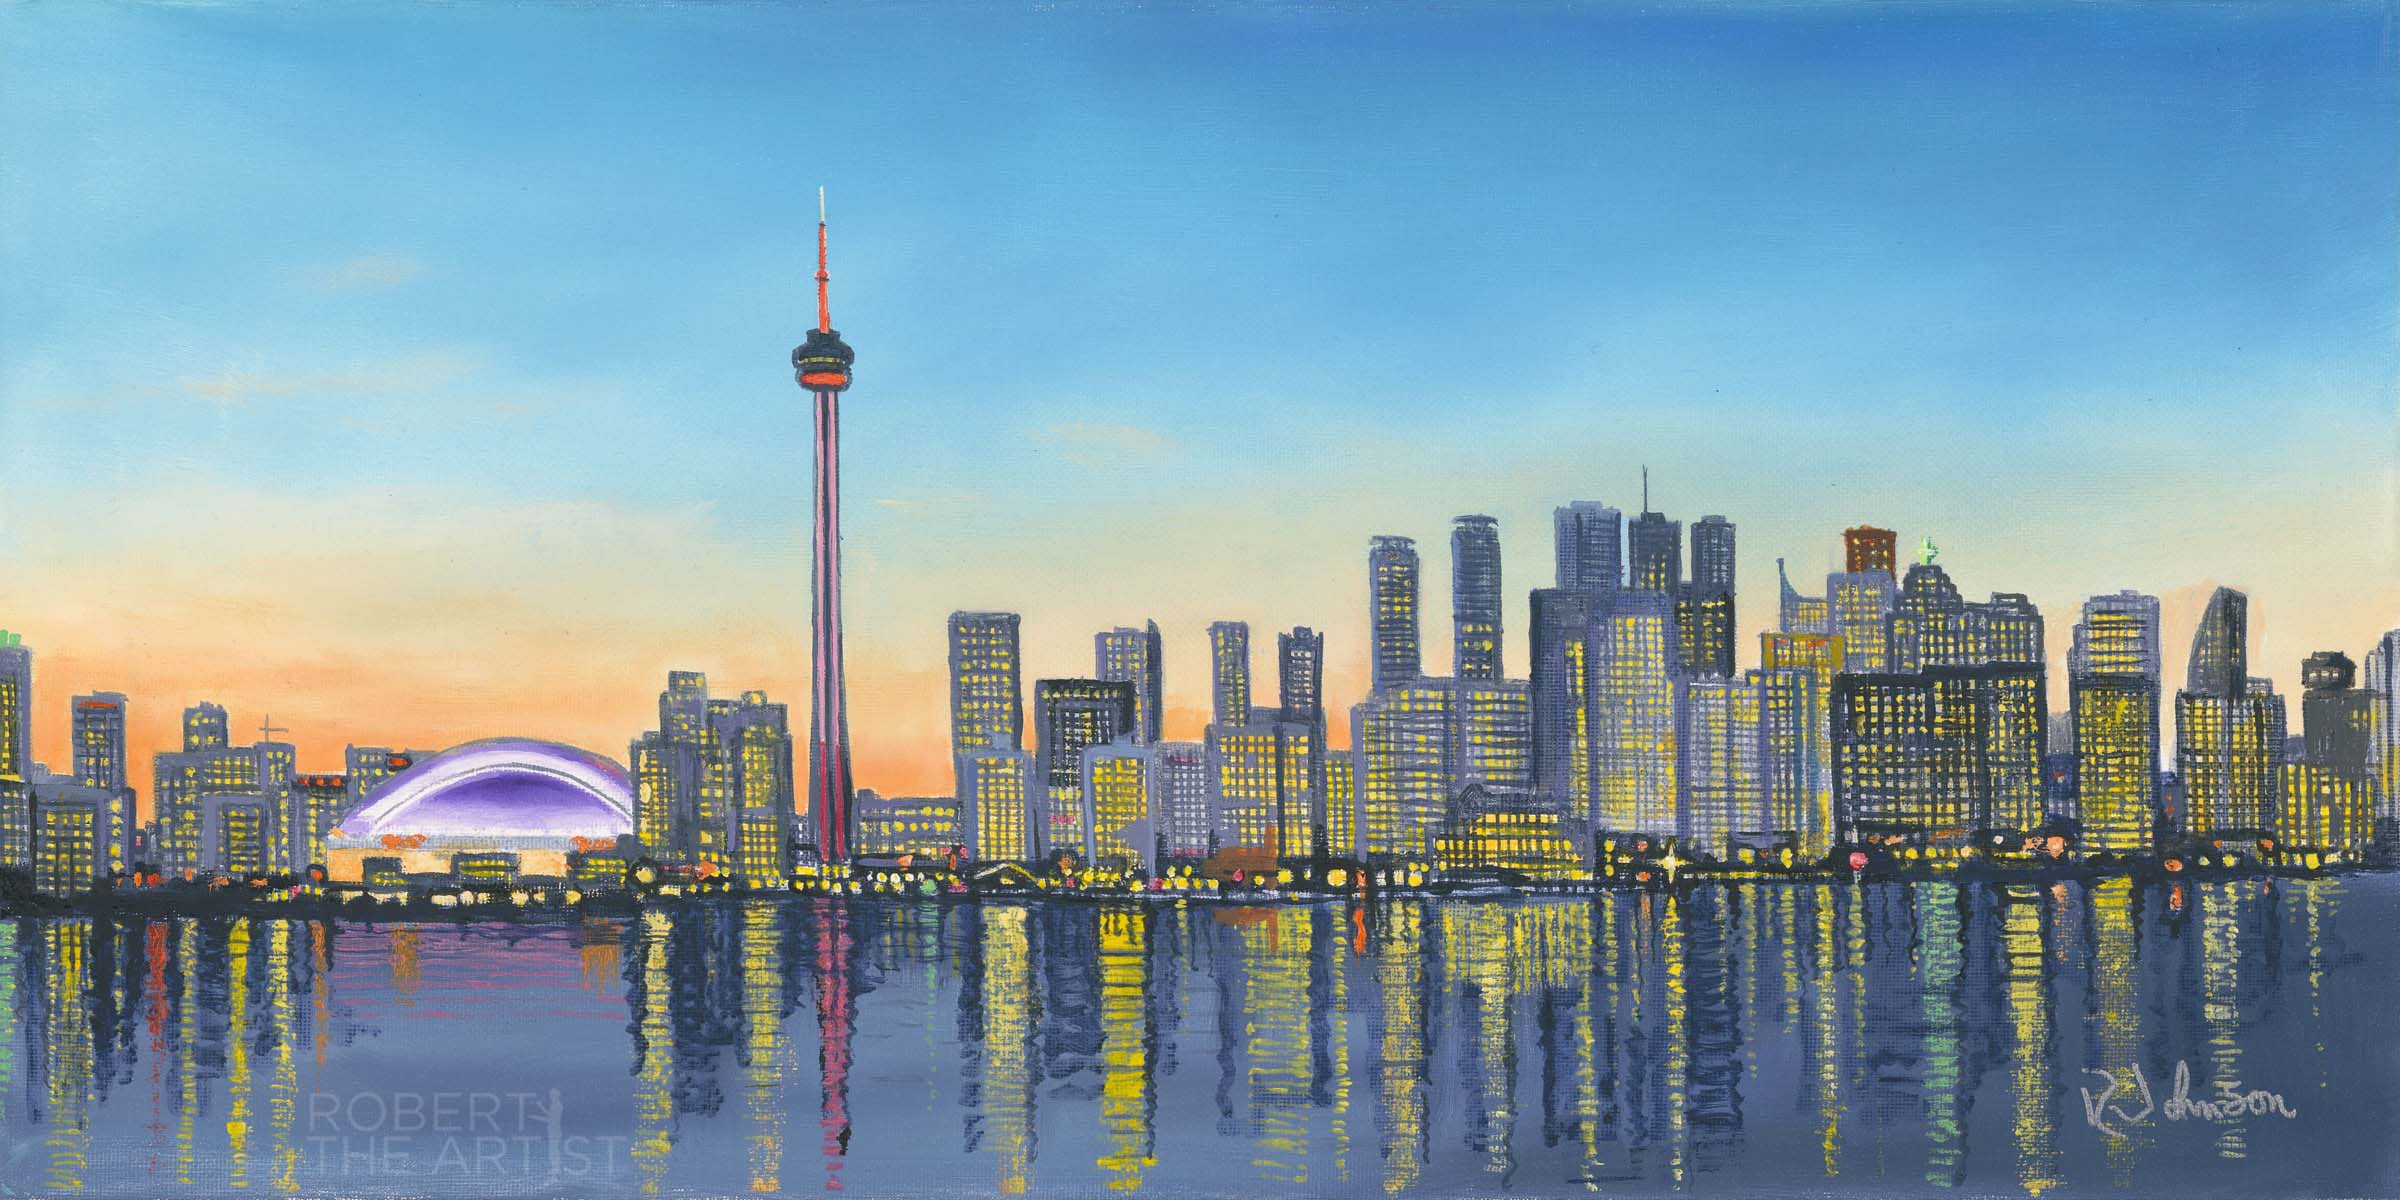 Toronto Skyline - Night - Robert The Artist